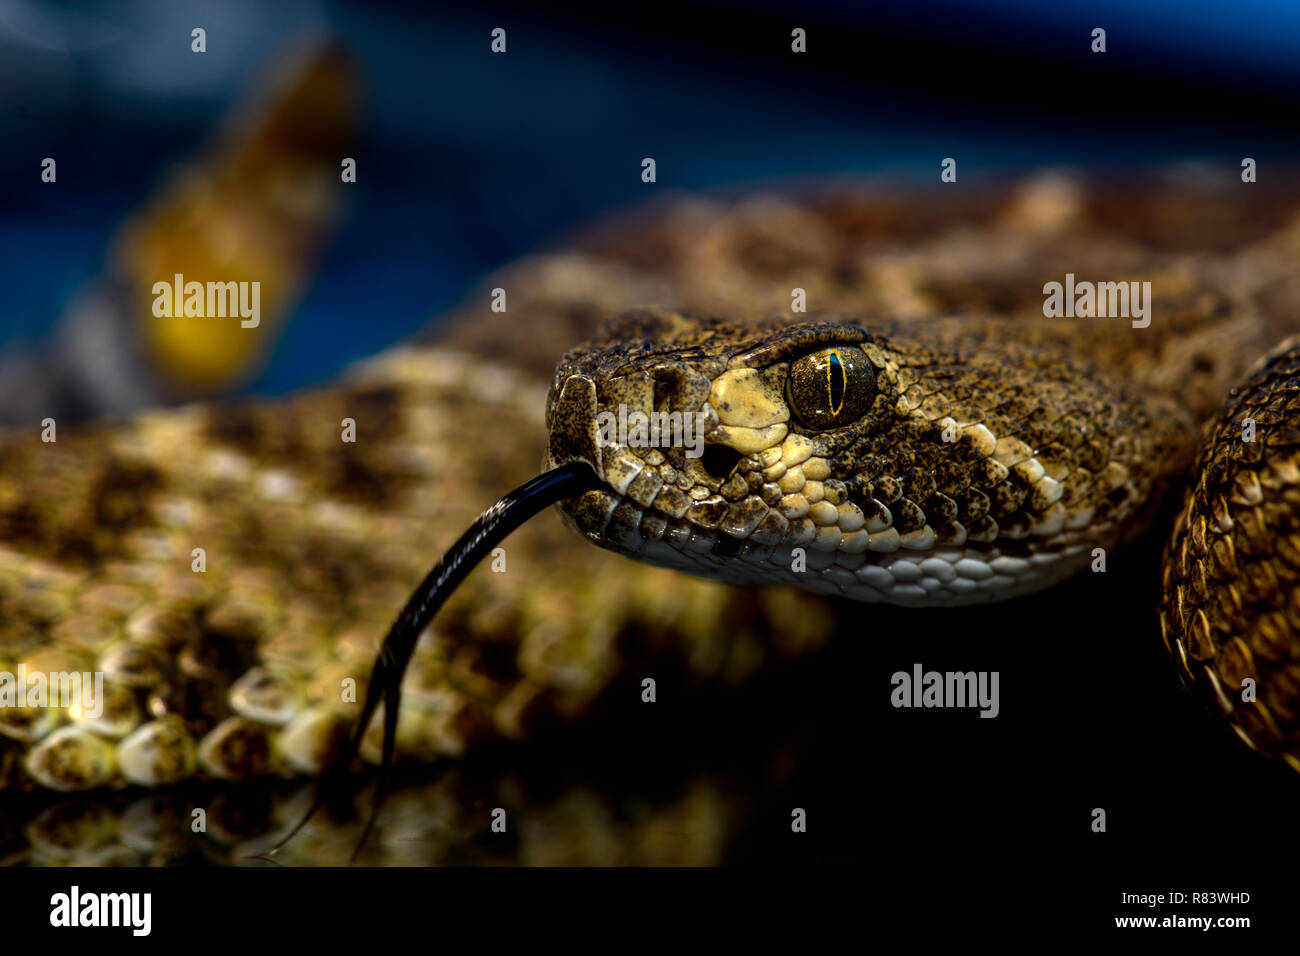 Western diamondback rattlesnake o Texas diamond-back (Crotalus atrox) Close-up con la lingua fuori Foto Stock